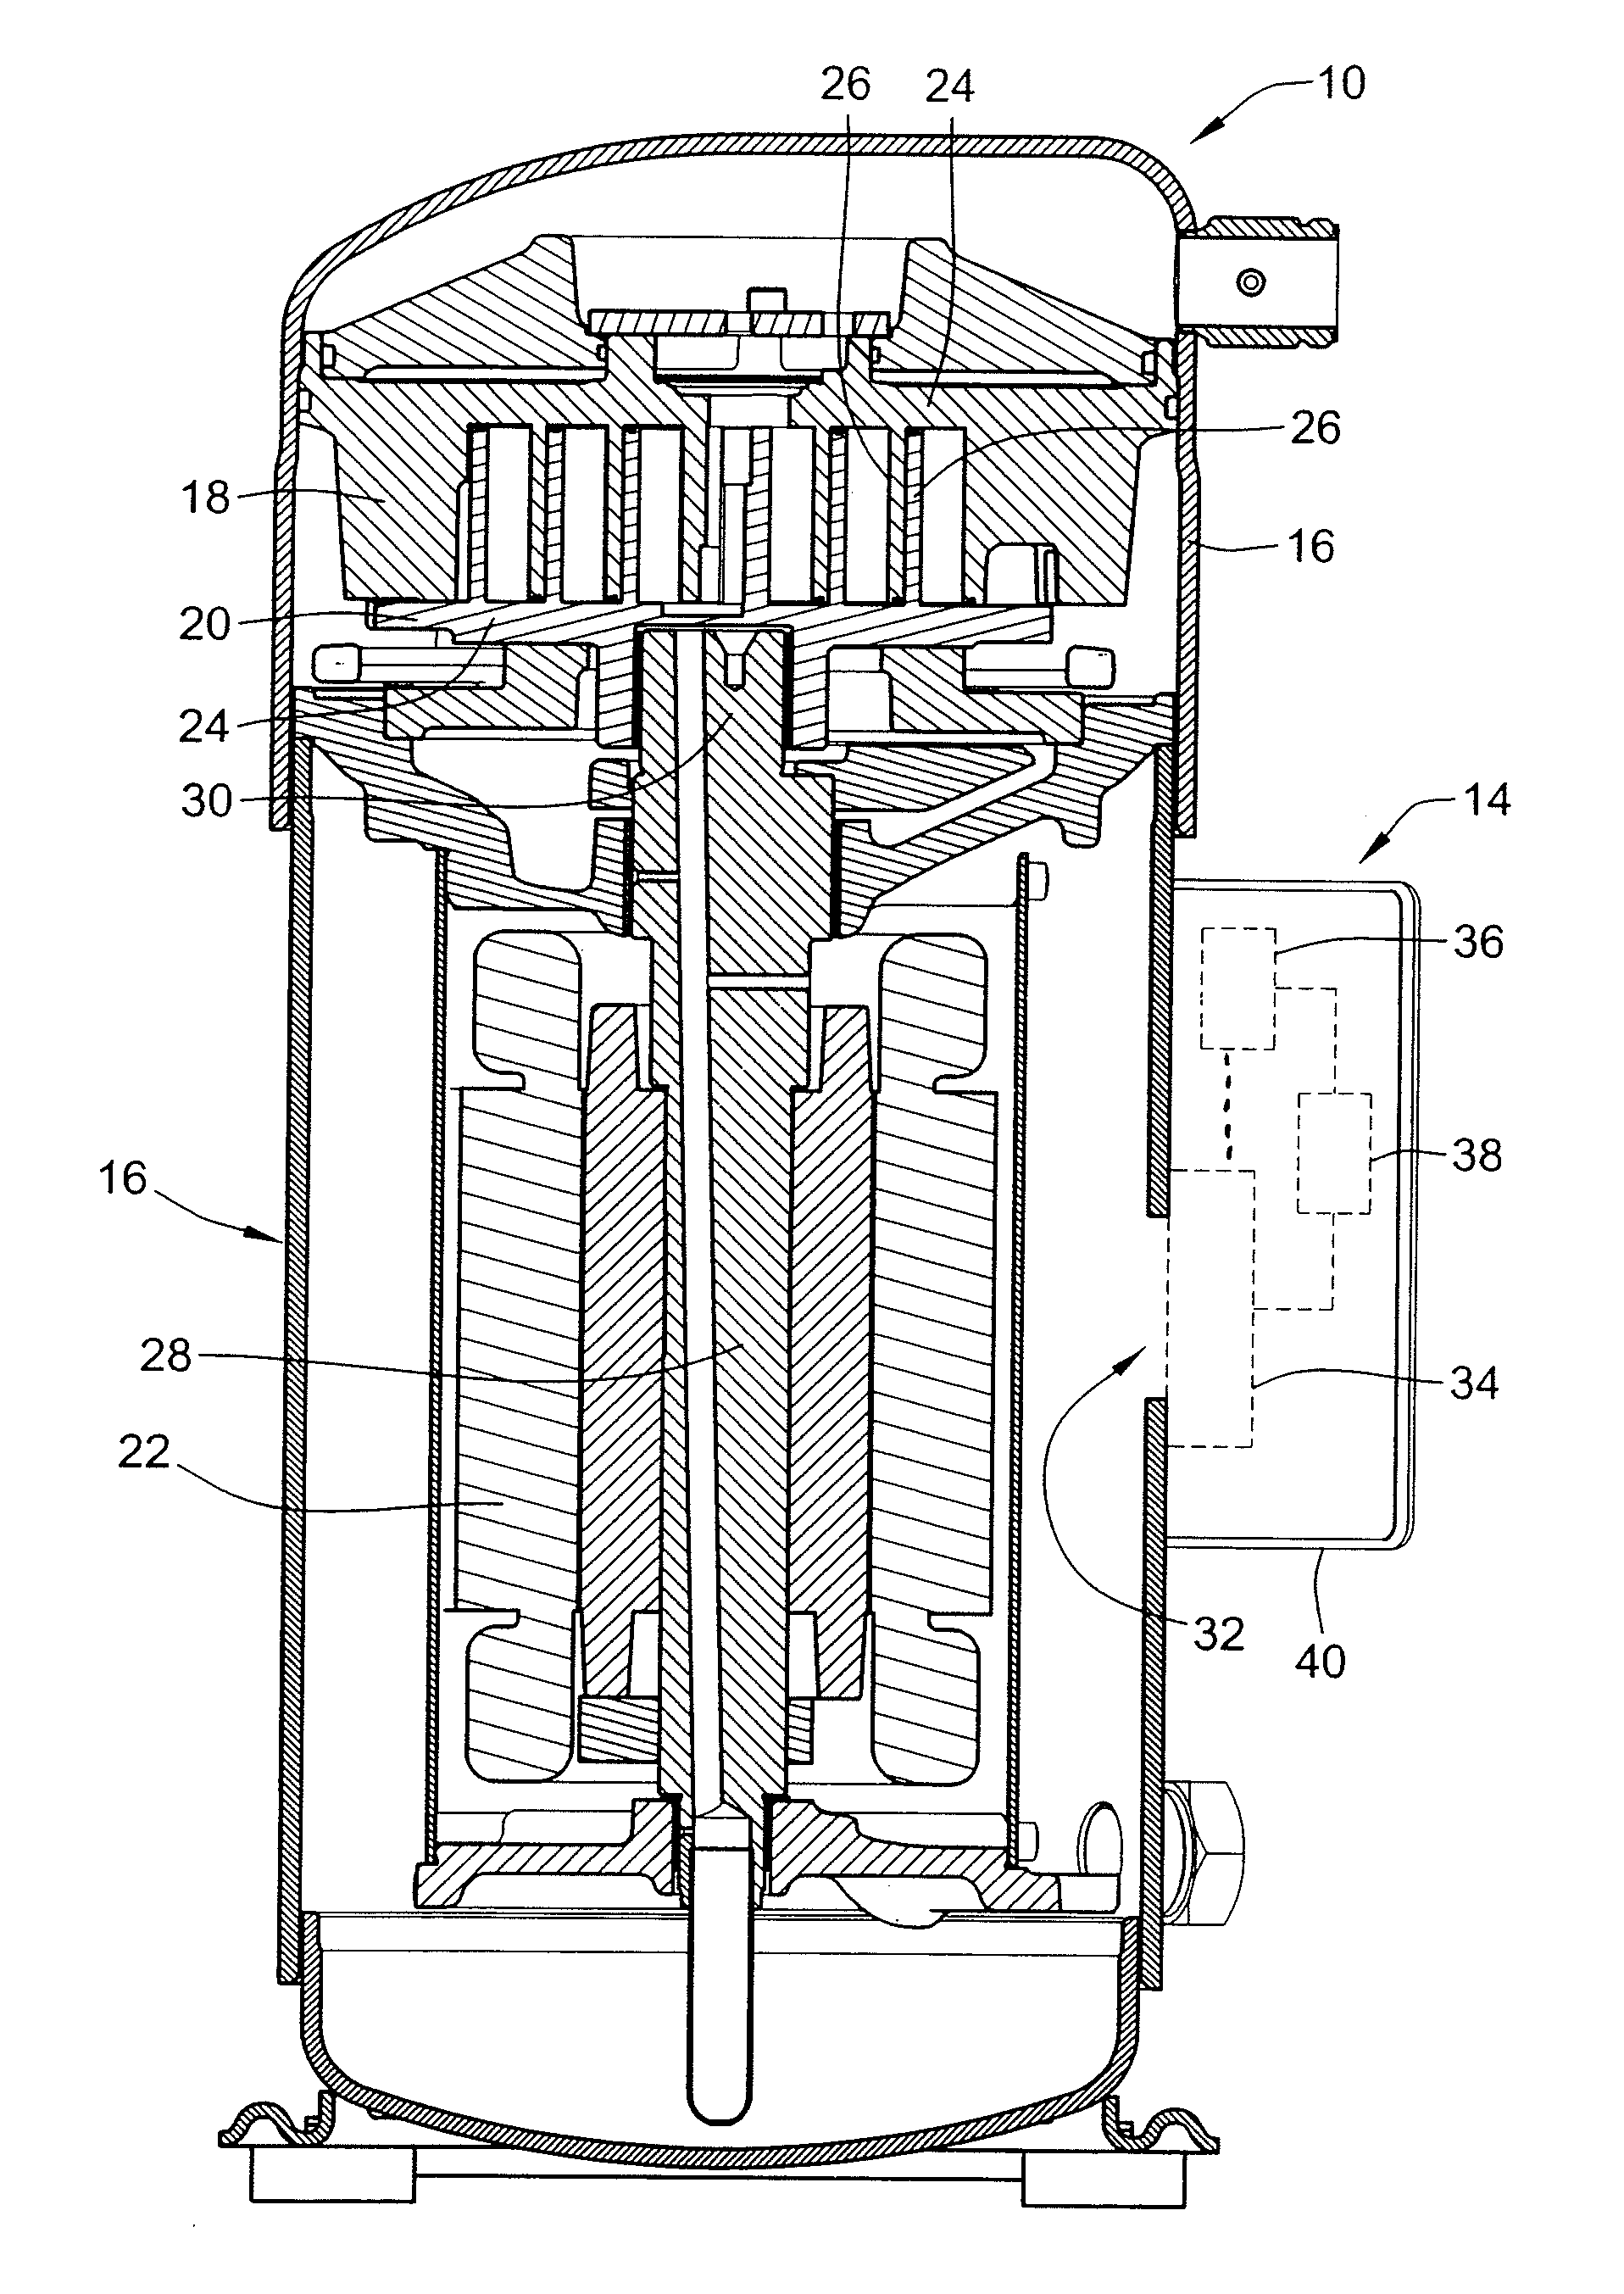 Scroll compressor having standardized power strip